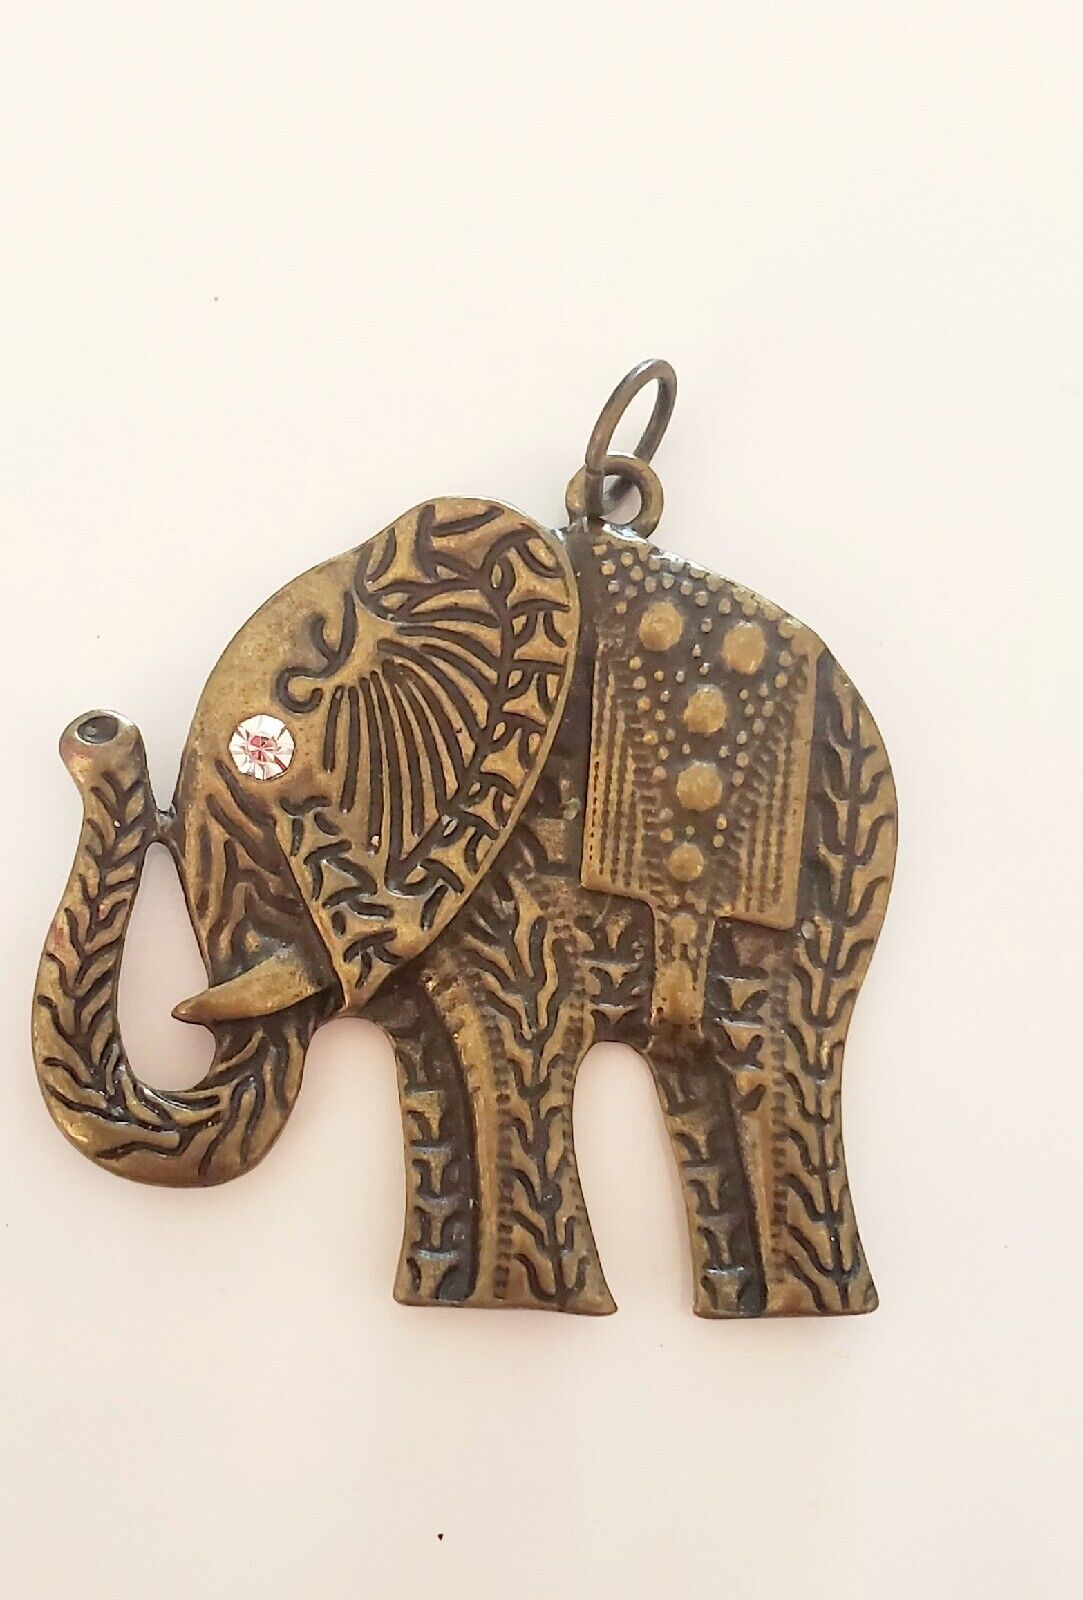 Antique Brass elephant Charm elephant Pendant - image 1